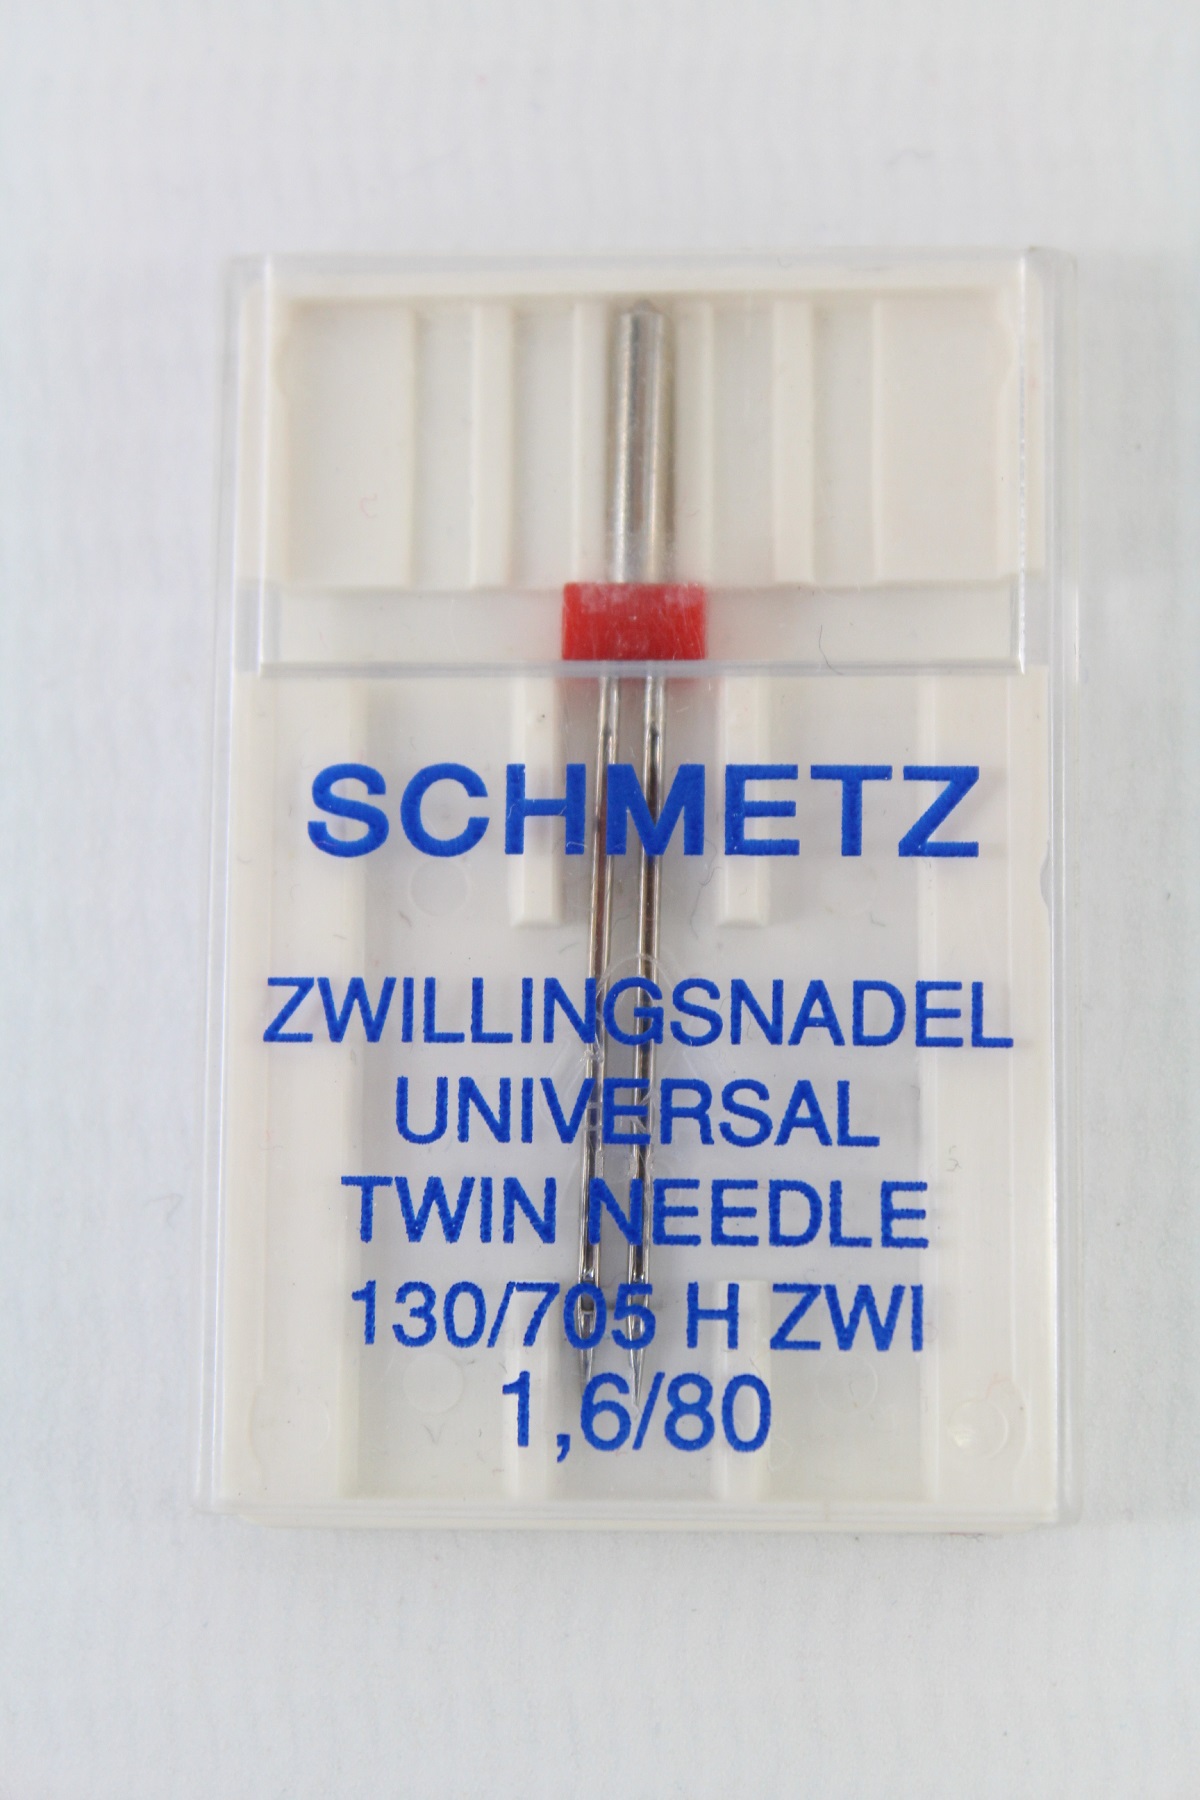 Schmetz Zwillingsnadel Universal 130/705 H ZWI 1,6/80